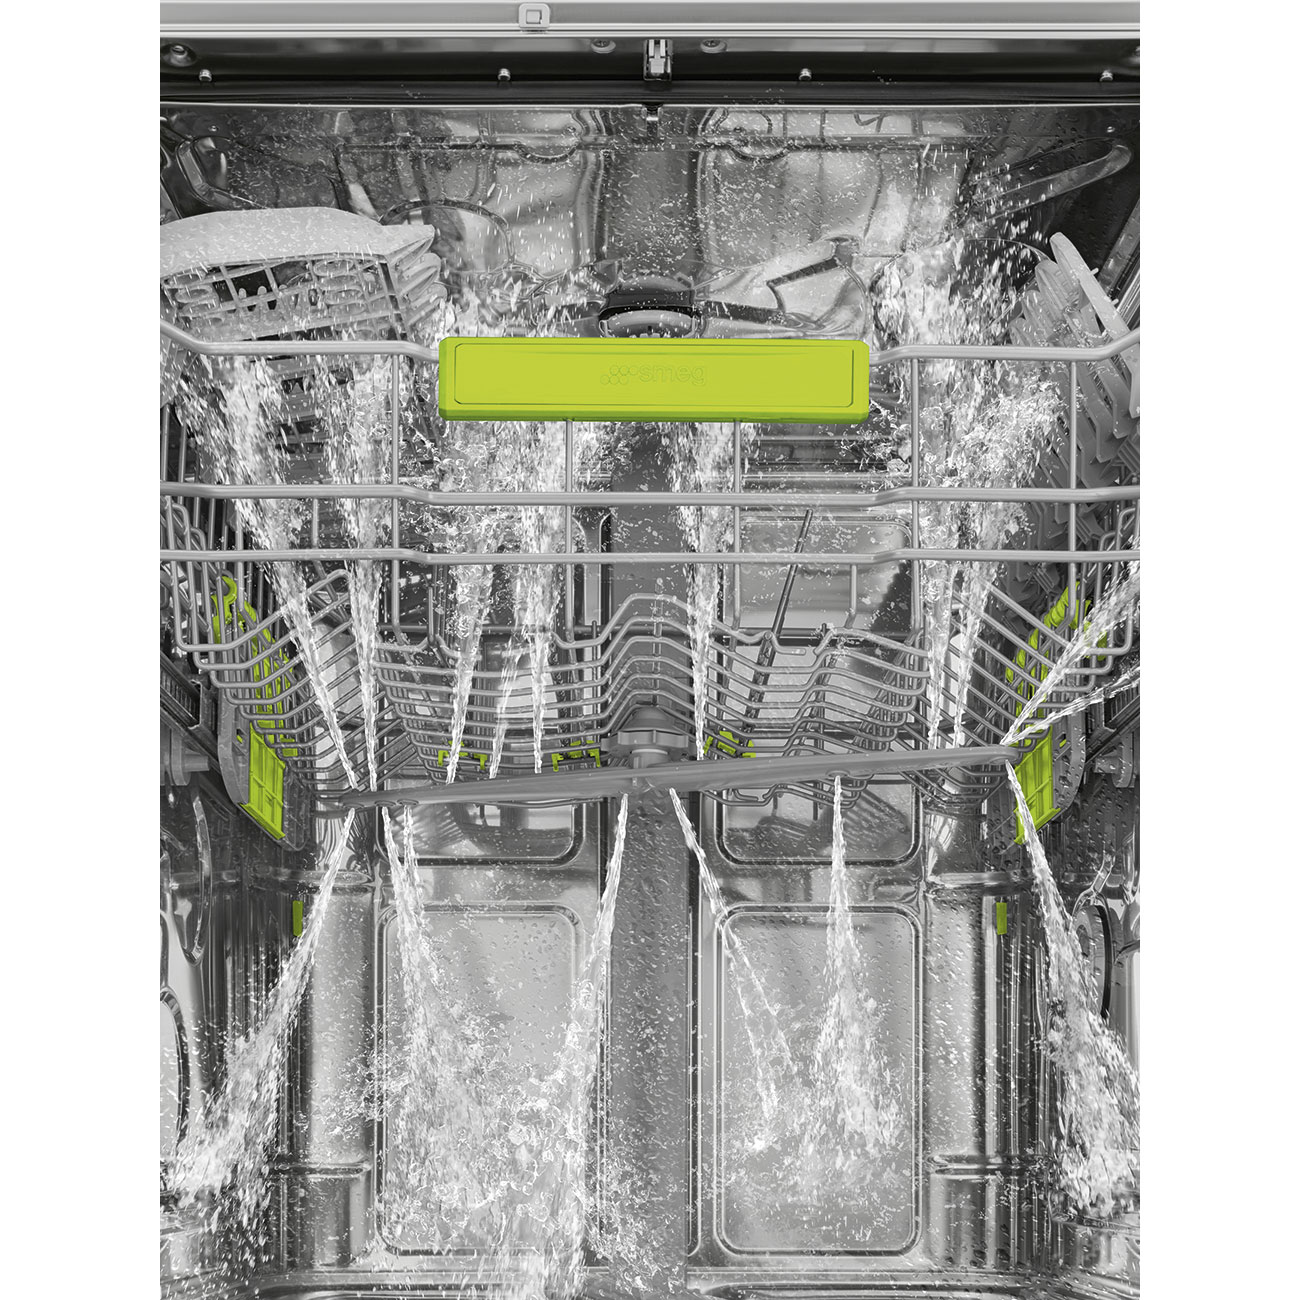 Fully-integrated built-in dishwasher 60 cm Smeg_8